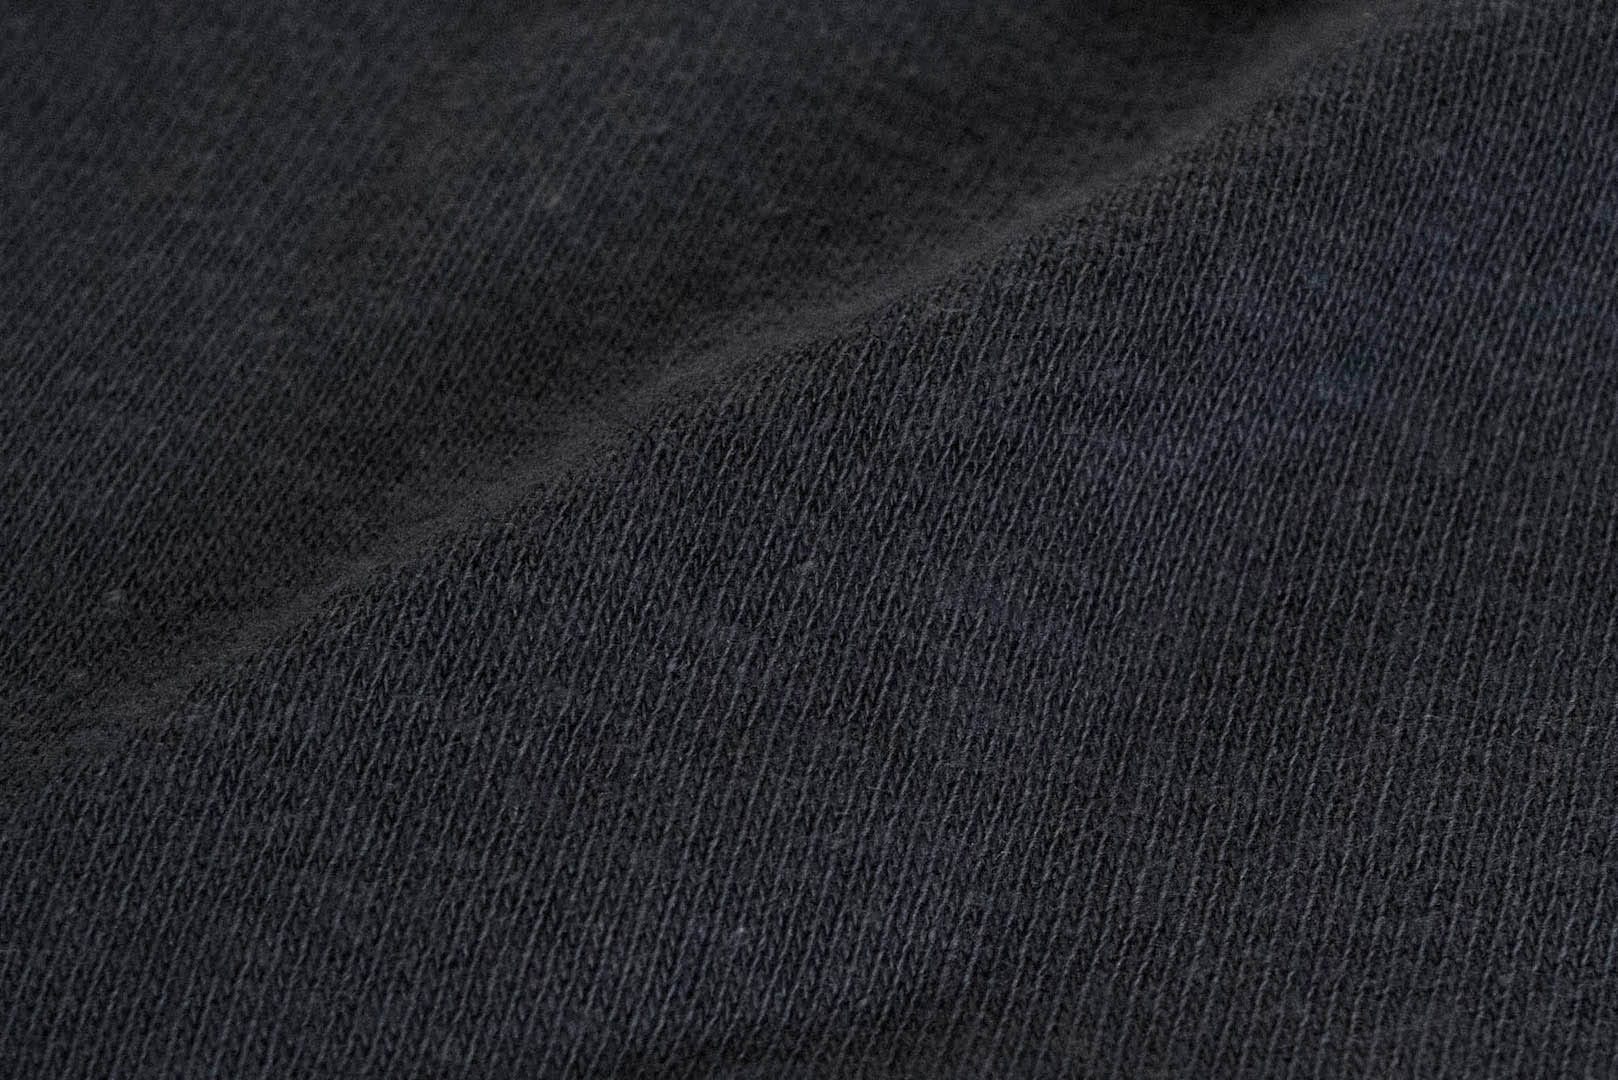 Dubble Works 11oz "Tsuri-ami" Loopwheeled Sweatshirt (Vintage Navy)